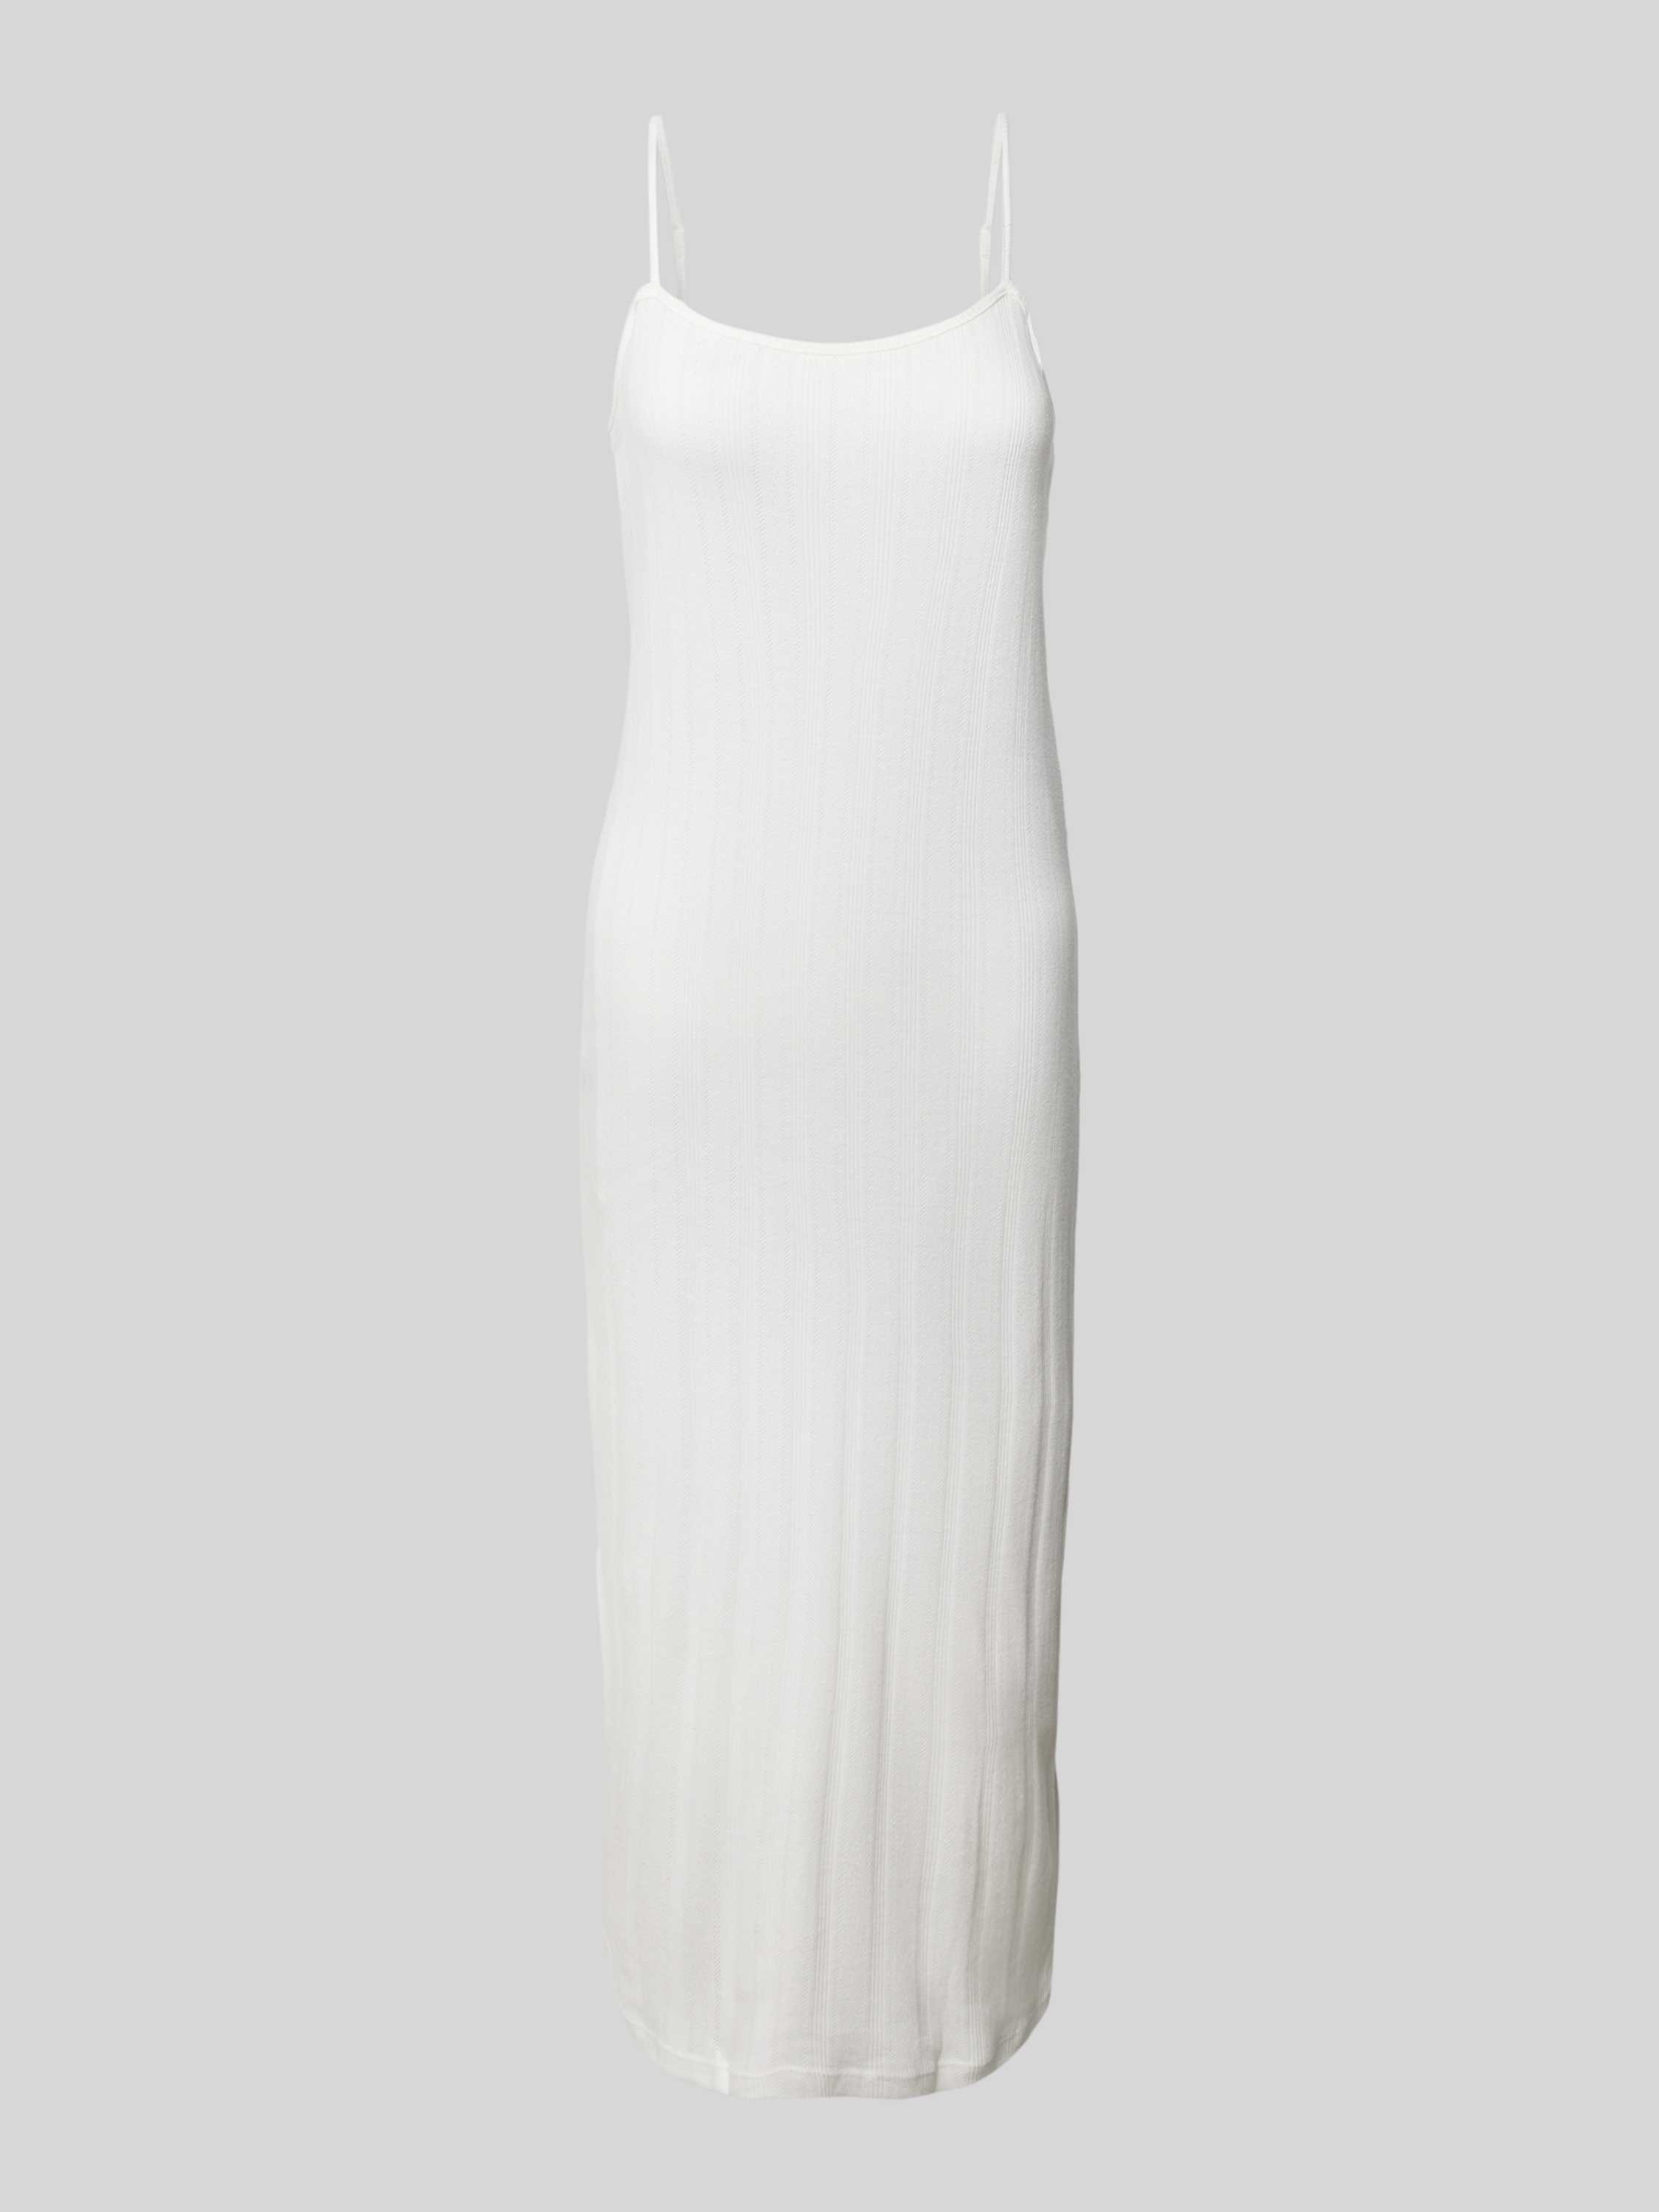 Knielanges Kleid mit Strukturmuster Modell 'VMJULIETA', Peek & Cloppenburg